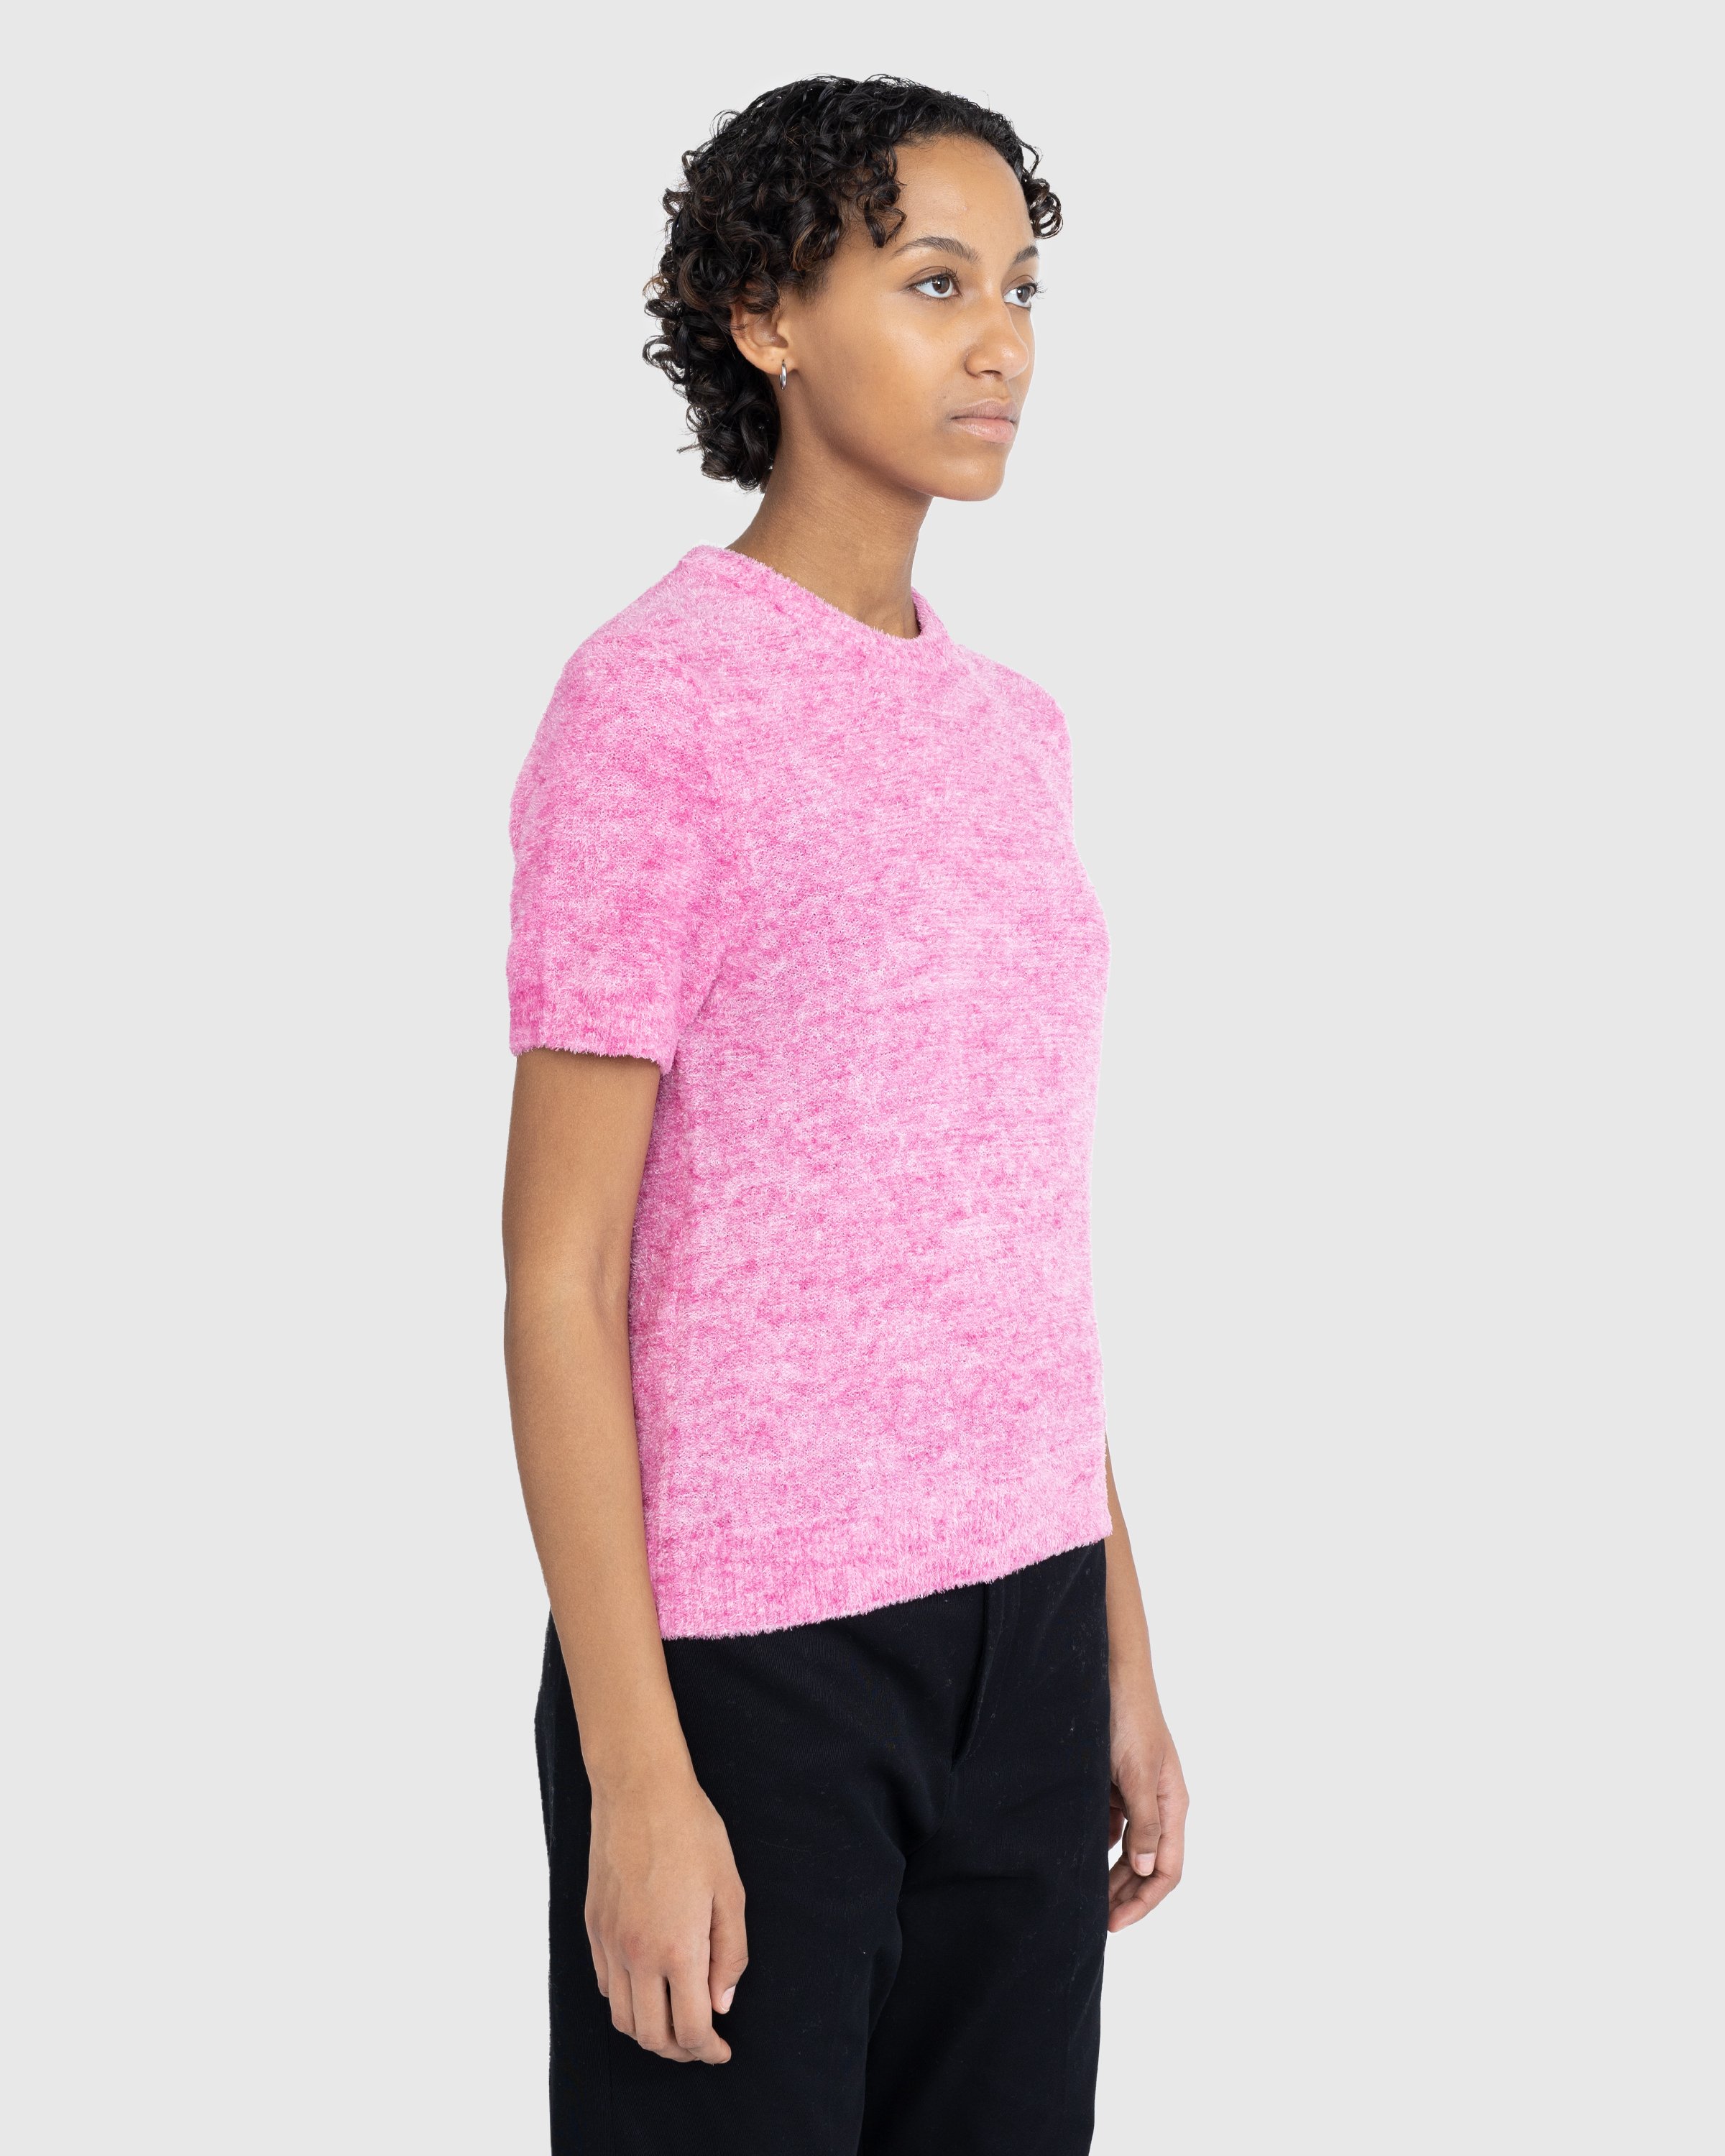 Acne Studios - Short-Sleeve Crewneck Sweater Pink - Clothing - Pink - Image 3